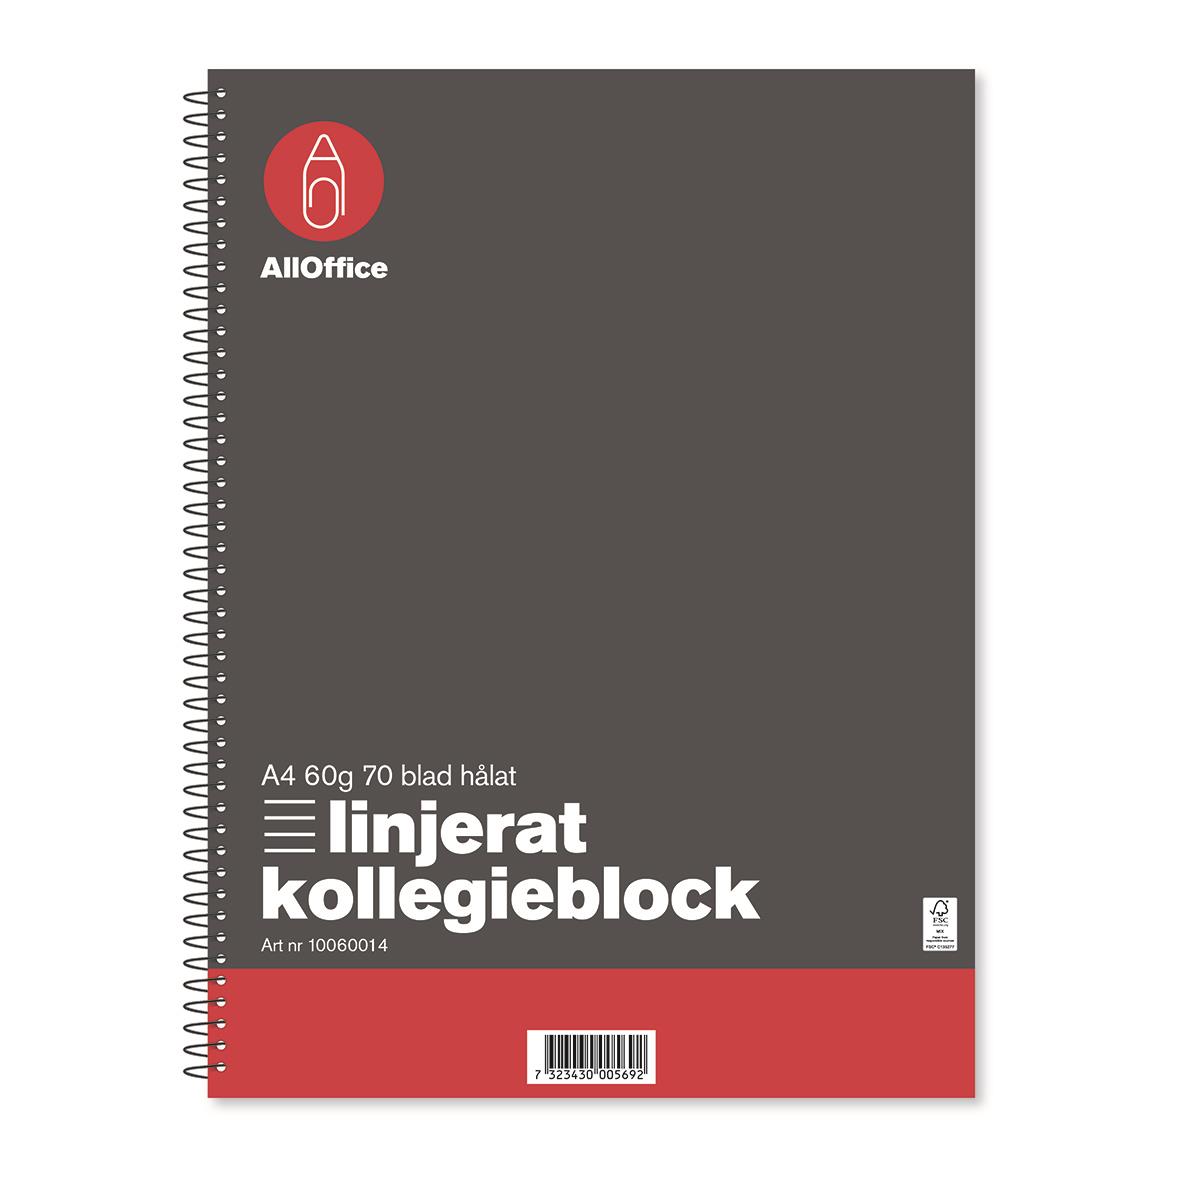 Kollegieblock AllOffice Linjerat 70 Blad A4 60g 10060014